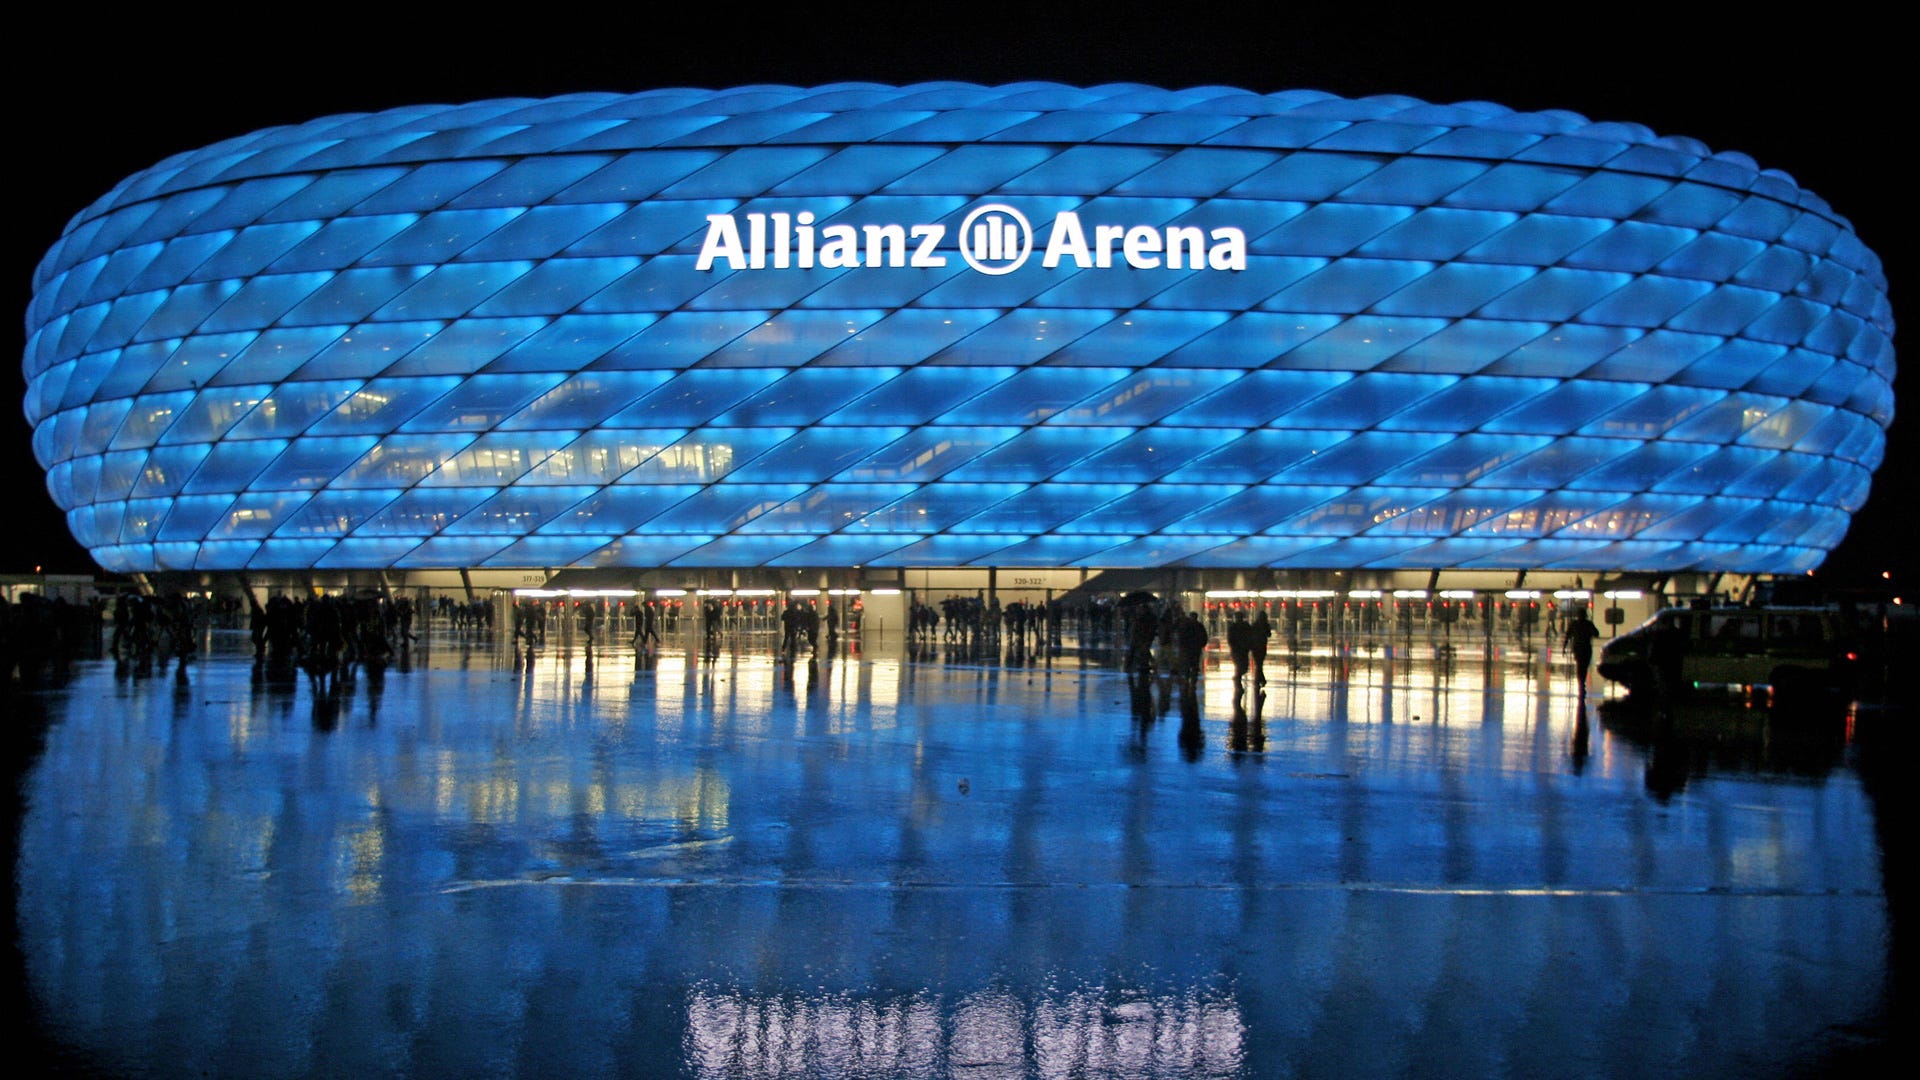 Allianz Arena Bayern Munich Stadium Capacity Location Facts Video Tour Goal Com Us